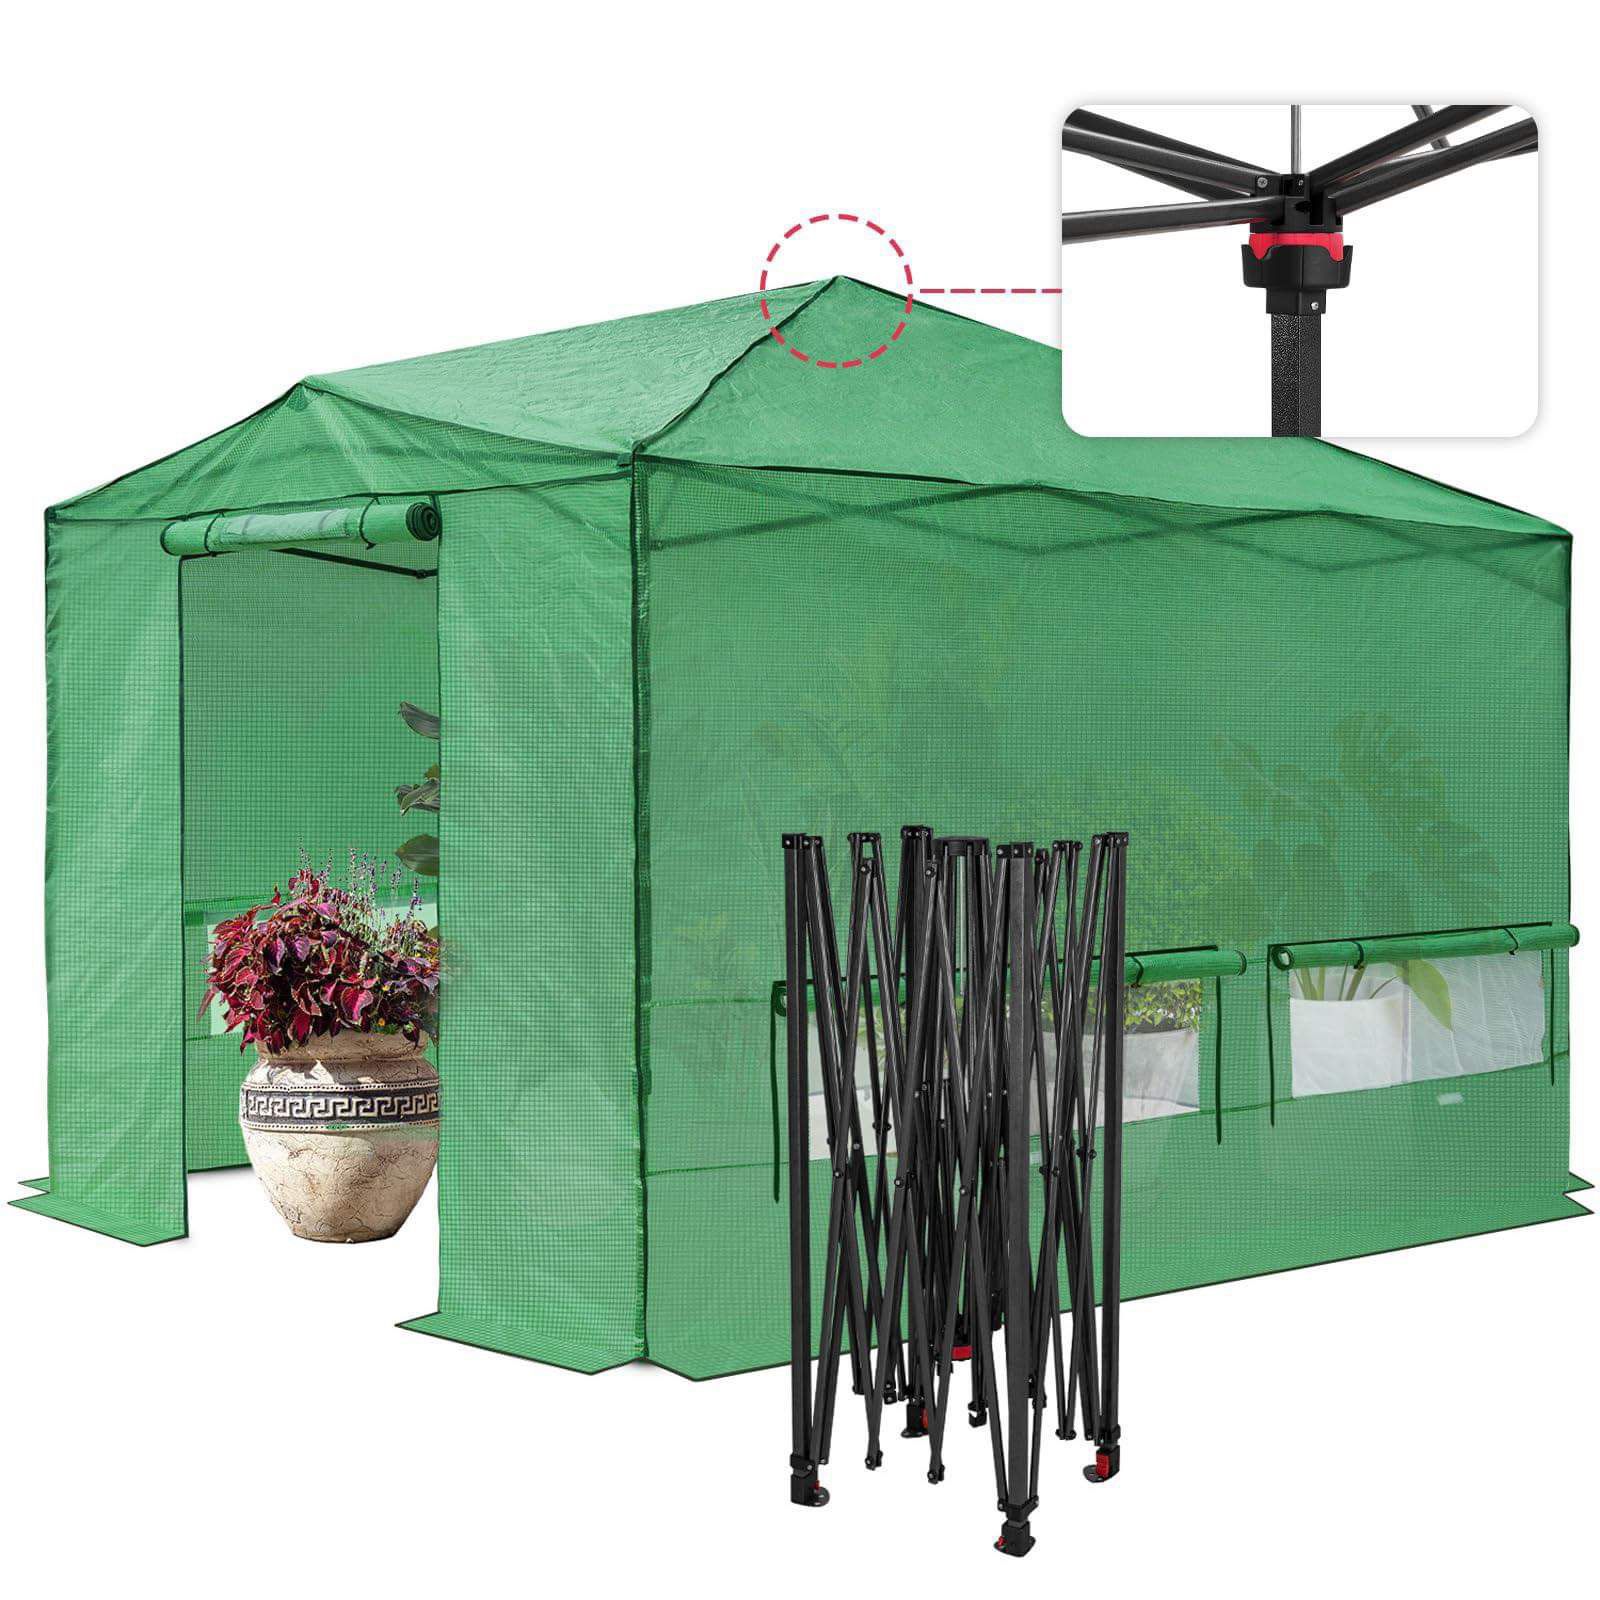 EAGLE PEAK 12x8 Portable Walk-in Greenhouse Instant Pop-up Indoor Outdoor Plant Gardening Green House